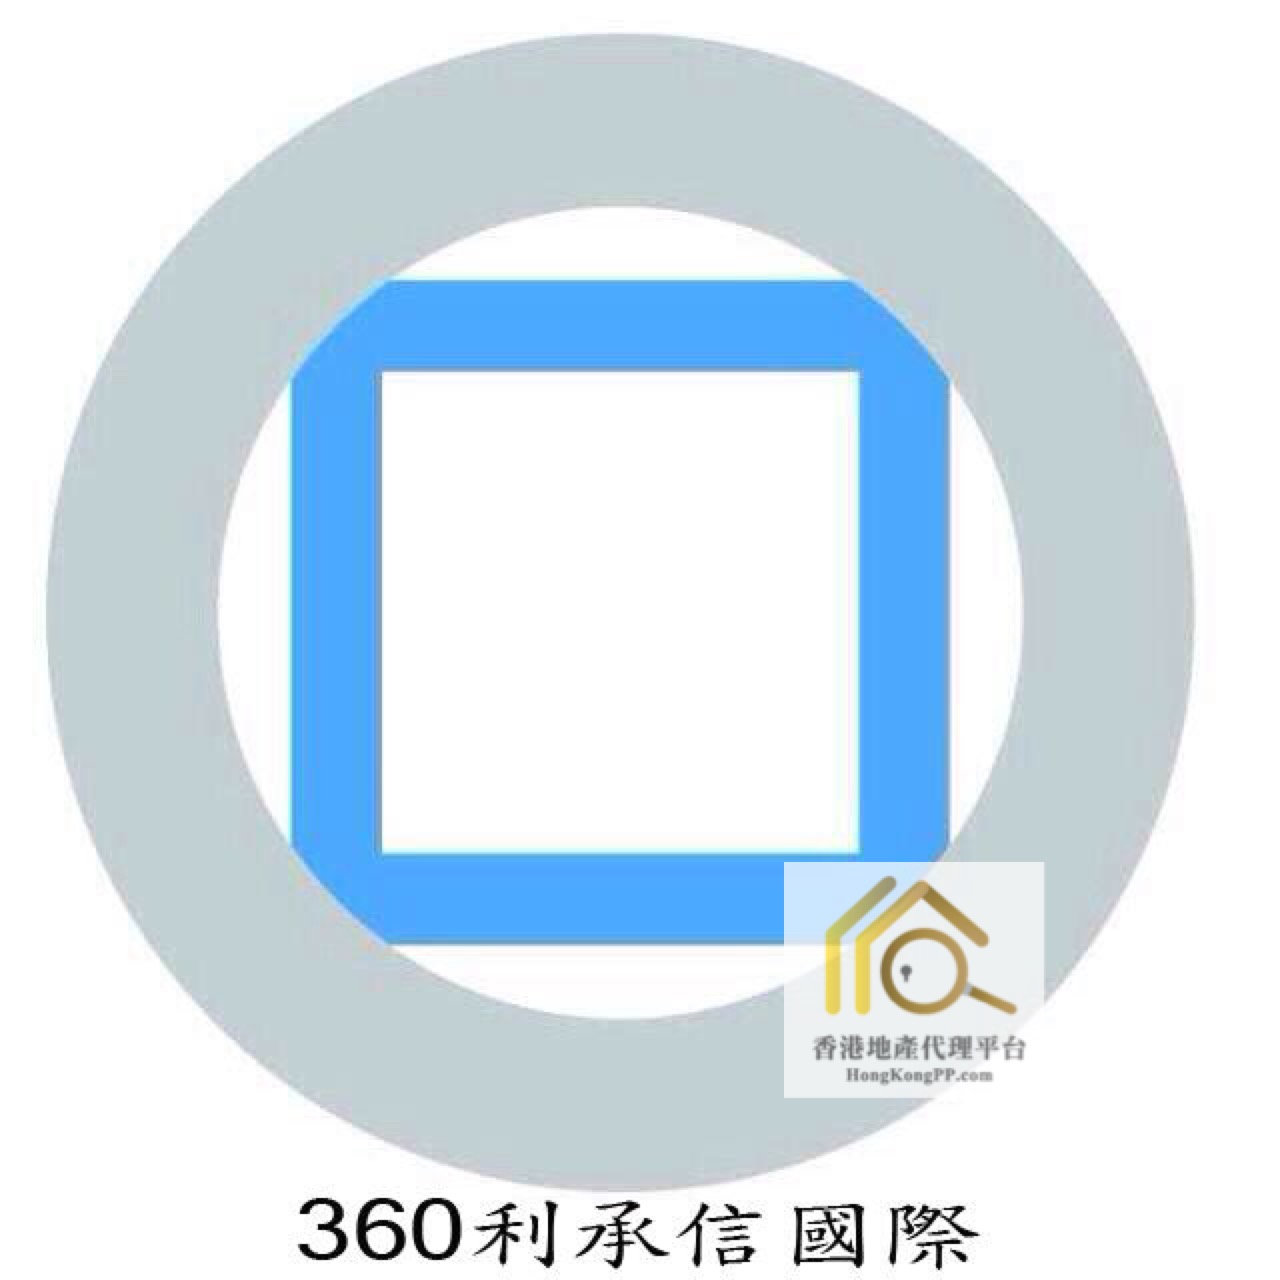 Estate Agent Company Estate Agent: 360 Consultant Limited